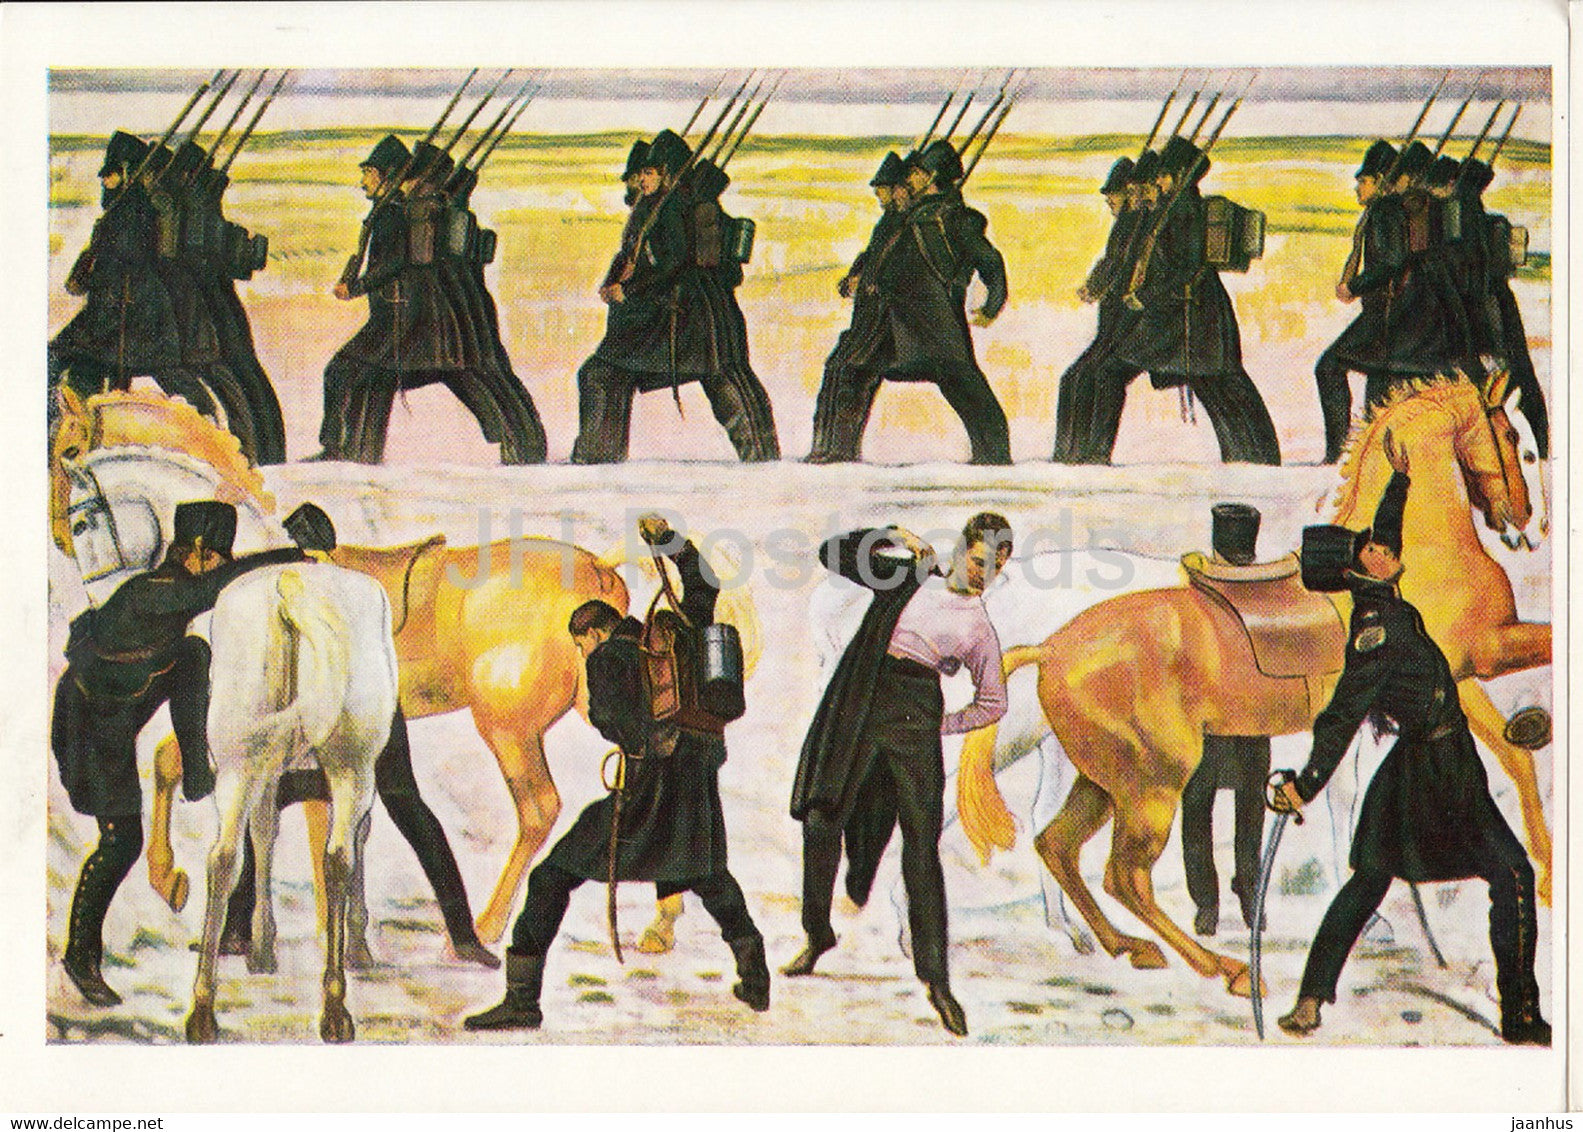 painting by Ferdinand Hodler - Auszug der Jenenser Studenten - 918 - Swiss art - Germany DDR - unused - JH Postcards